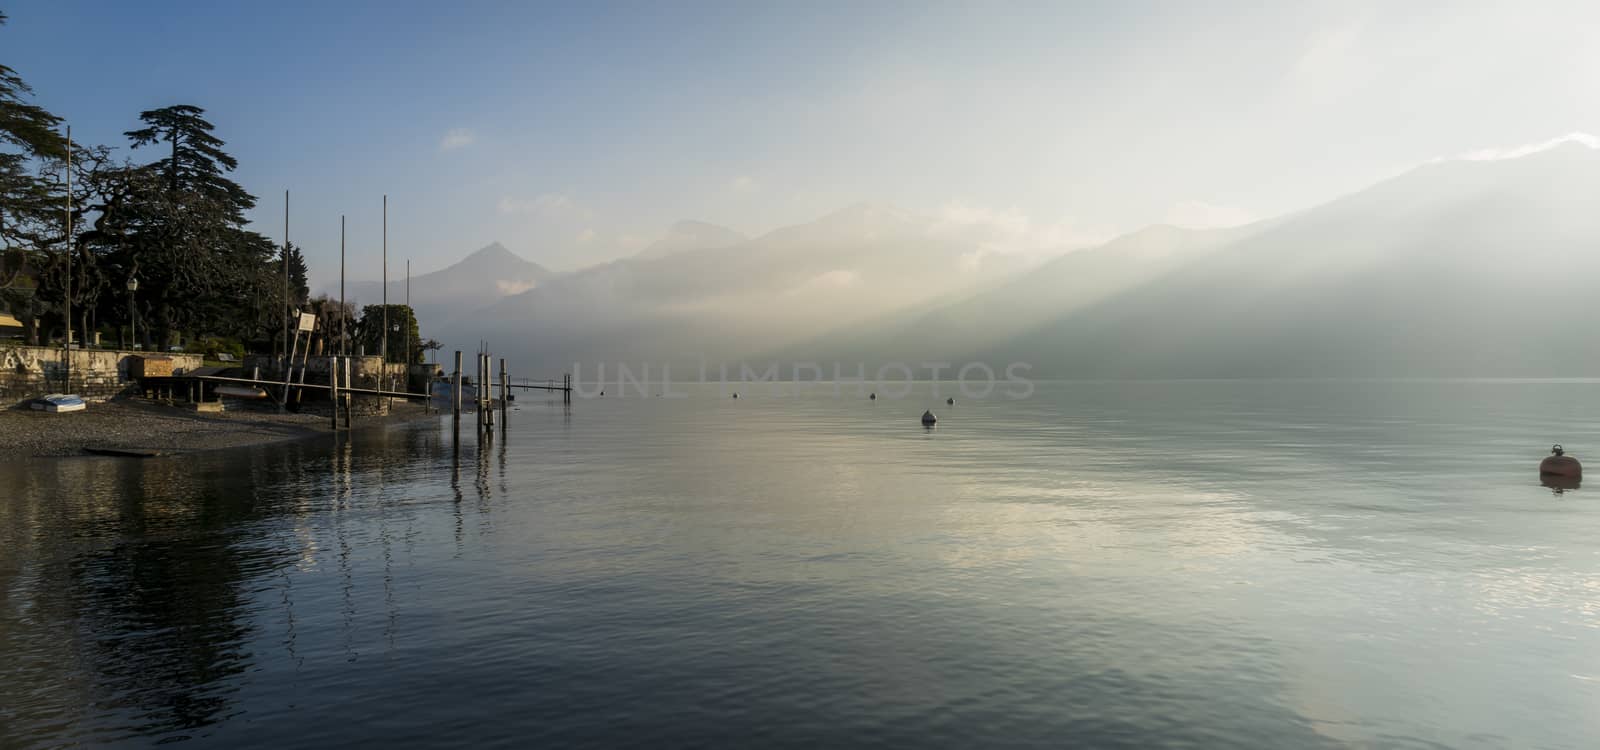 Foggy morning in Mennagio, Lake Como, Italy by hongee